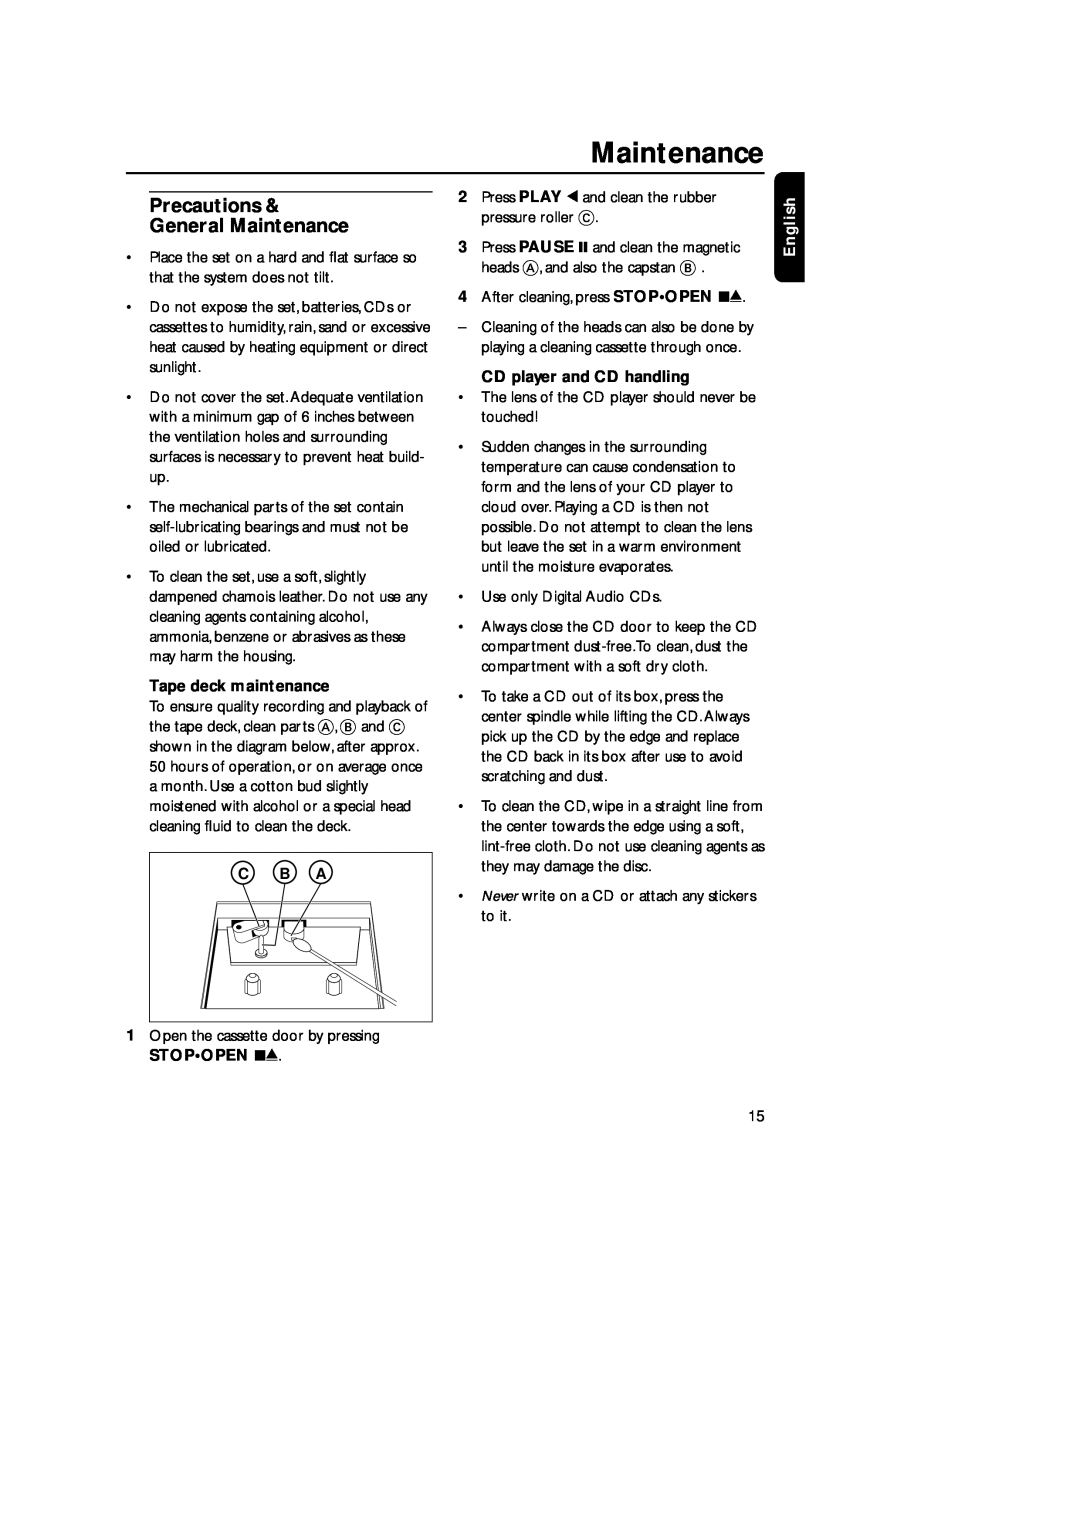 Philips AZ 1018 Precautions General Maintenance, C B A, Tape deck maintenance, CD player and CD handling, English 